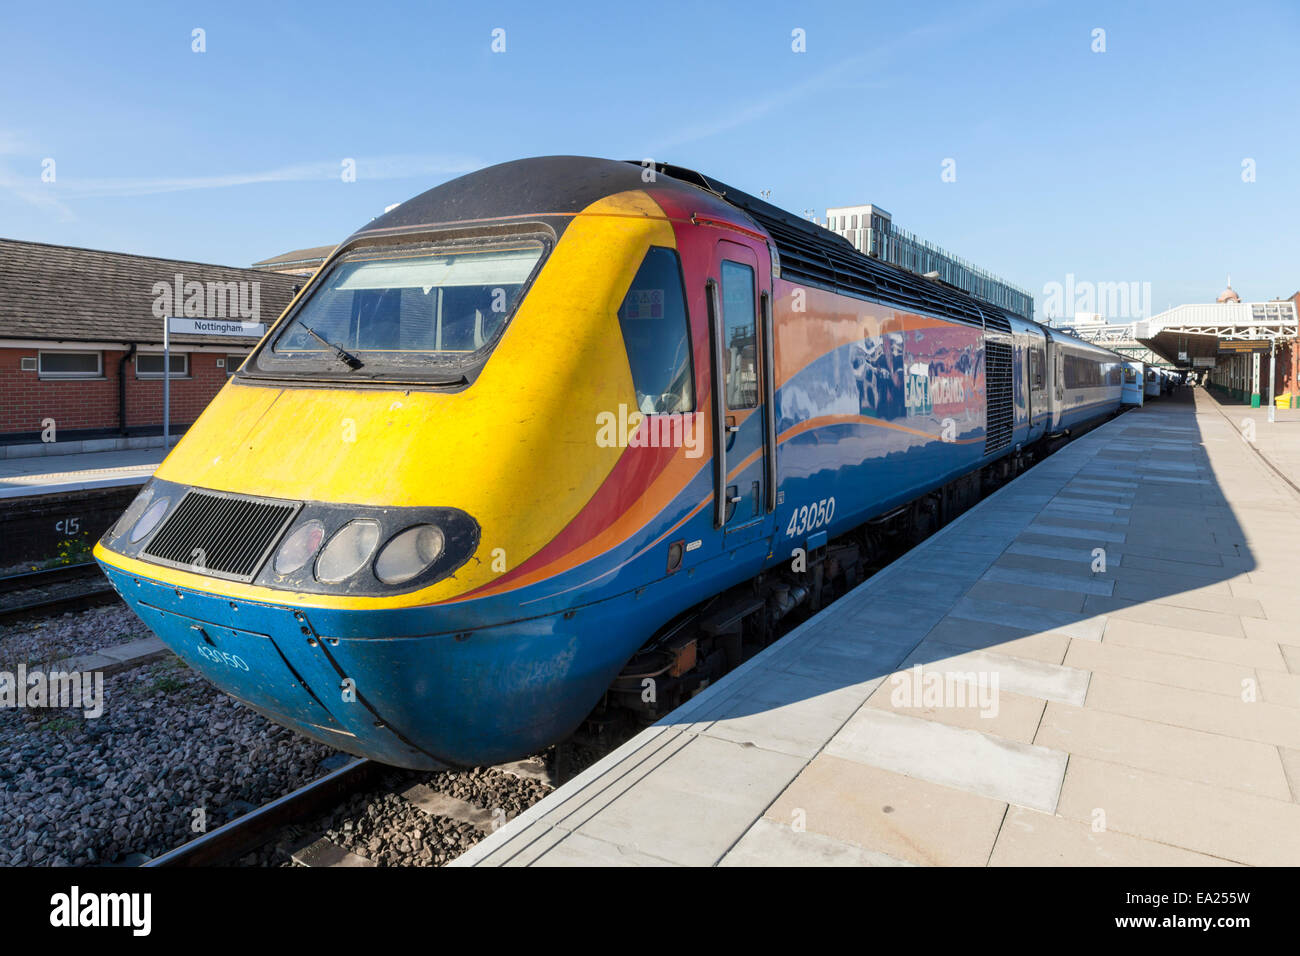 East Midlands Trains High Speed Train (HST) am Bahnhof Nottingham, Nottingham, England, Großbritannien Stockfoto